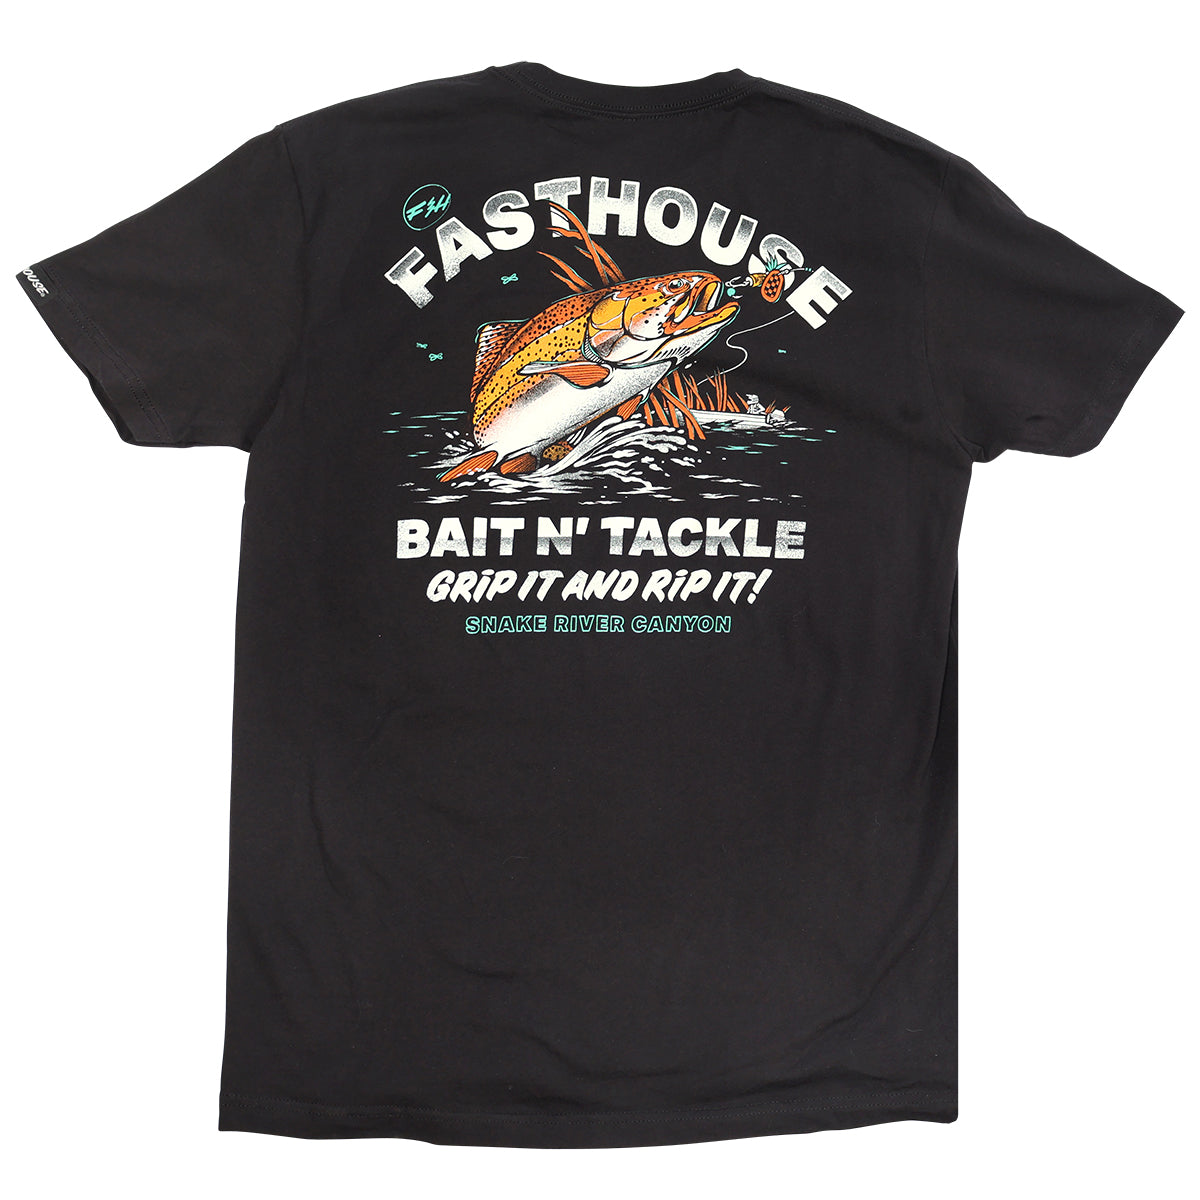 Fasthouse Gone Fishin' Short-Sleeve Tee - Black - Medium